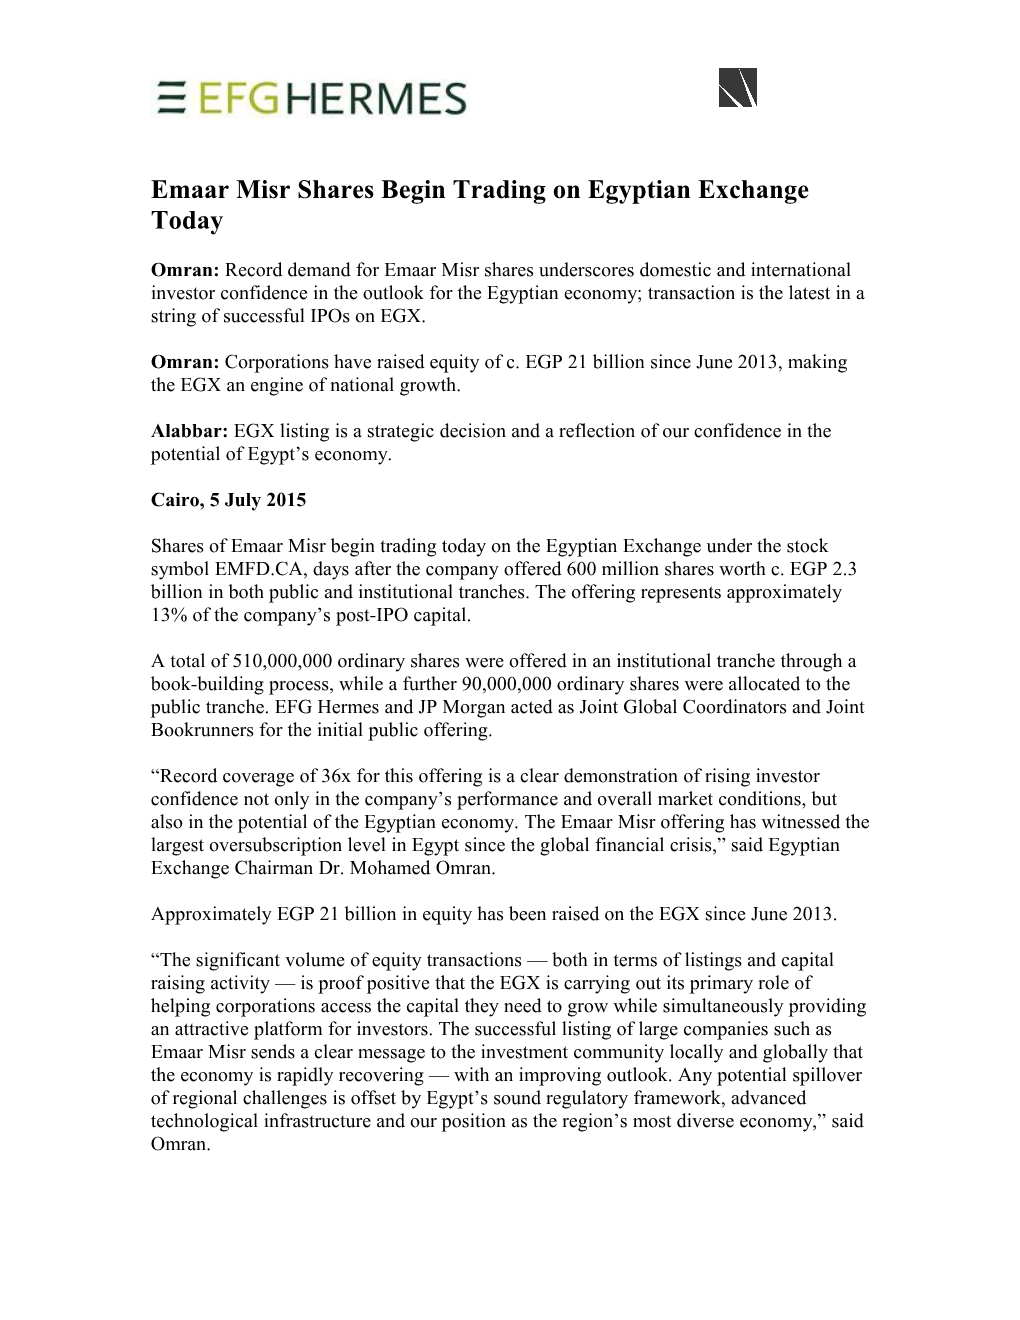 Emaar Misr Shares Begin Trading on Egyptian Exchange Today